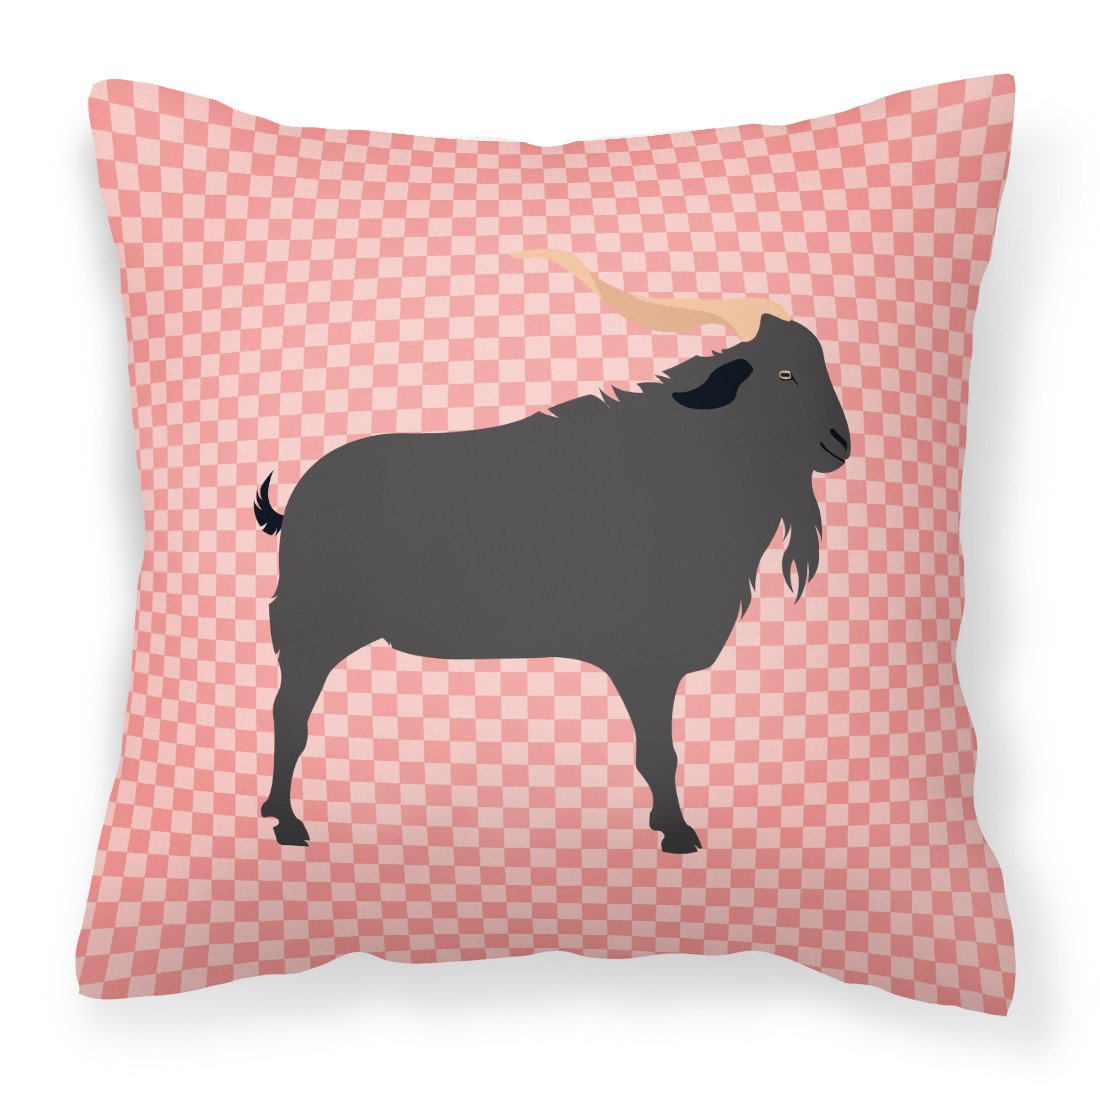 Verata Goat Pink Check Fabric Decorative Pillow BB7882PW1818 by Caroline's Treasures